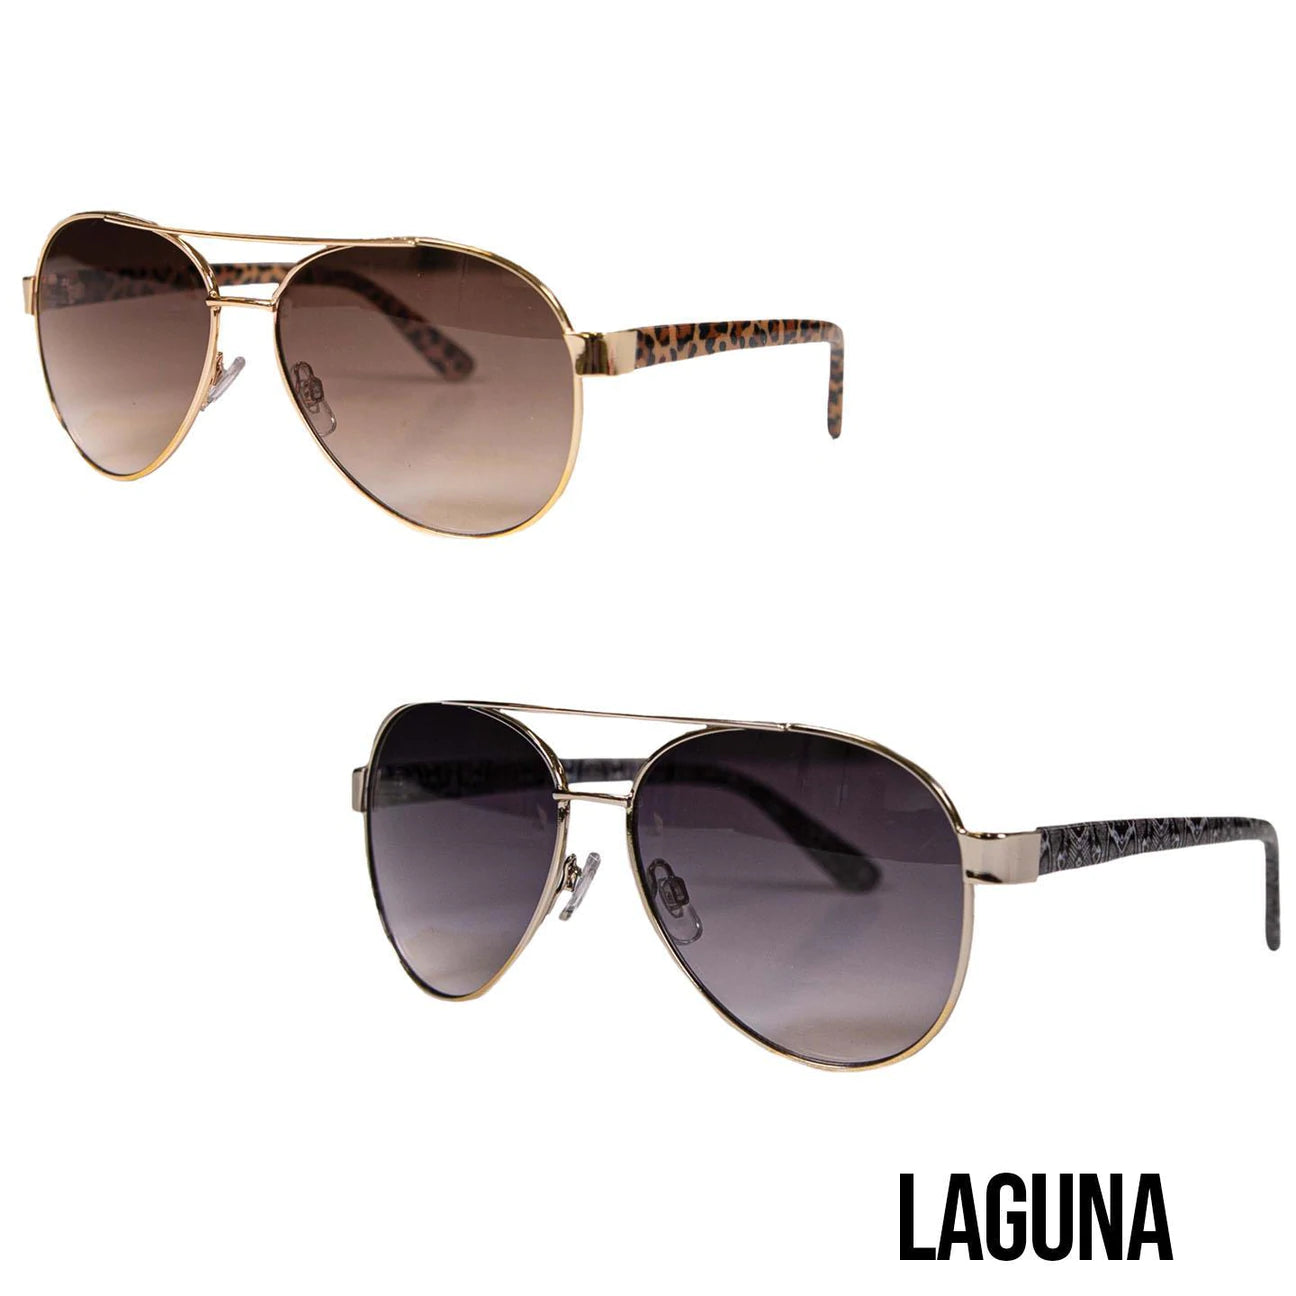 Simply Southern Laguna Sunglasses